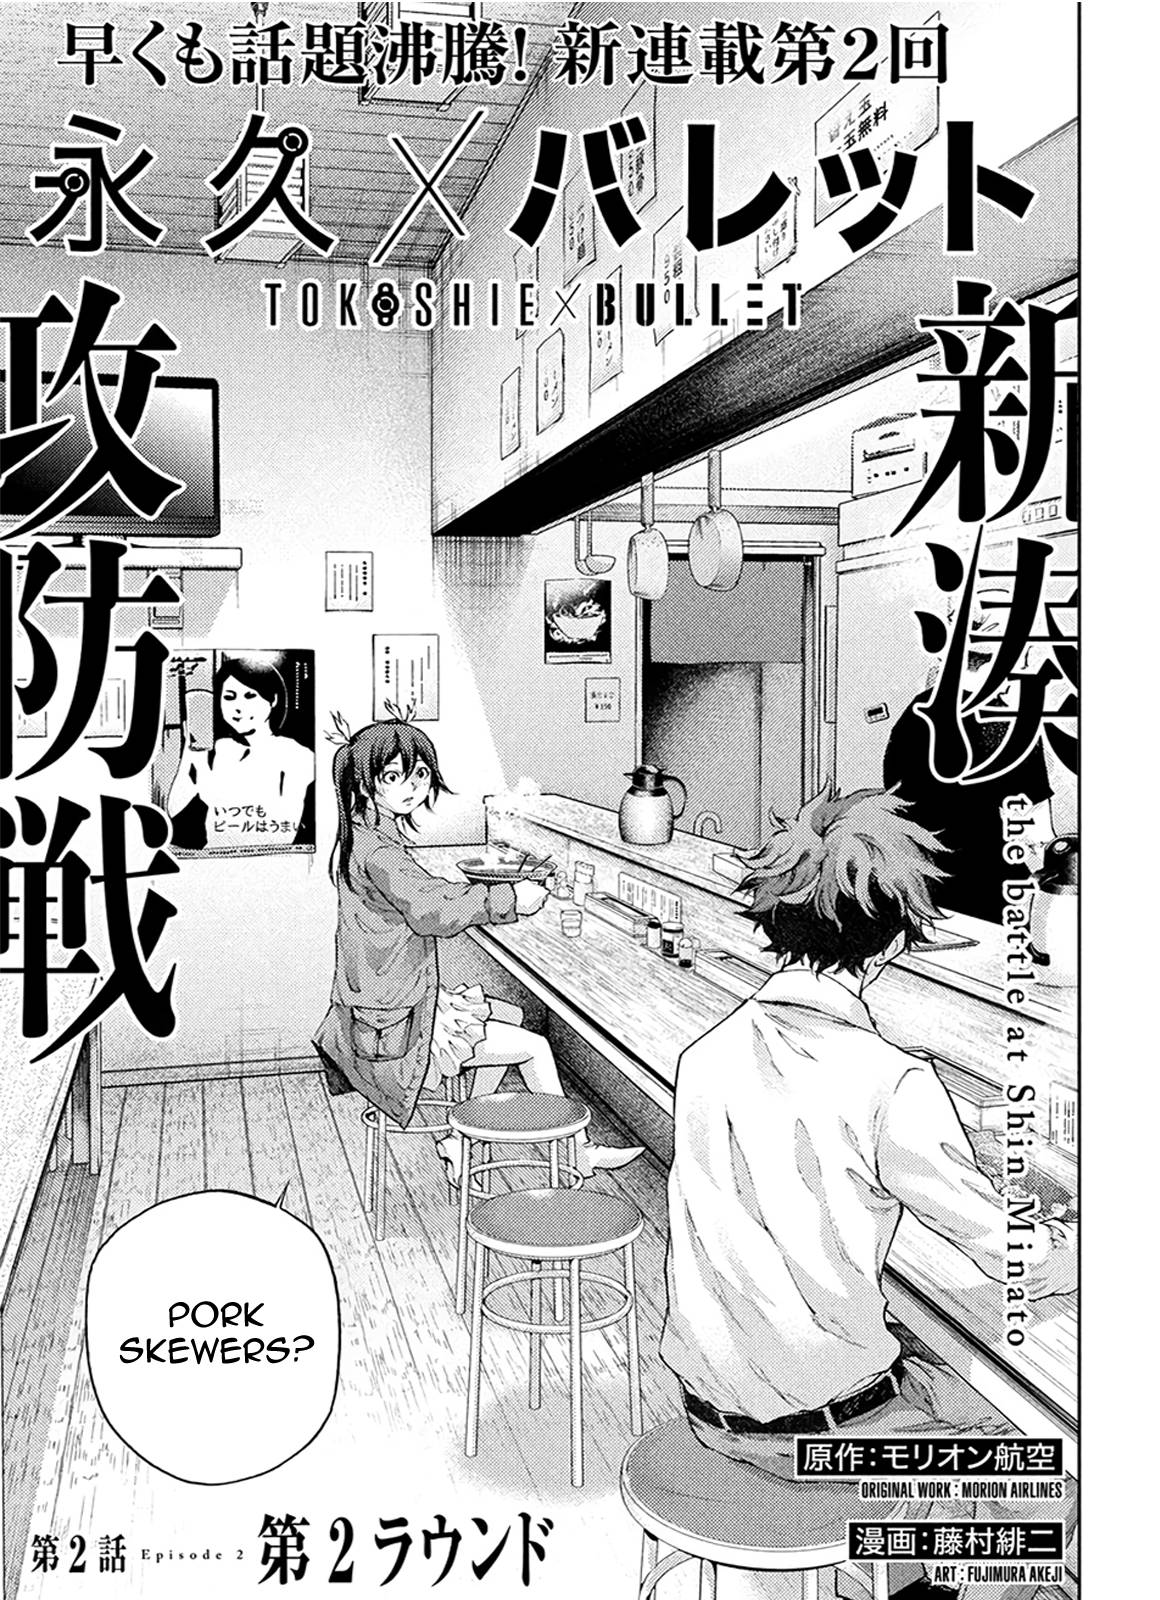 Tokoshie × Bullet - Shin Minato Koubou-Sen - chapter 2 - #1